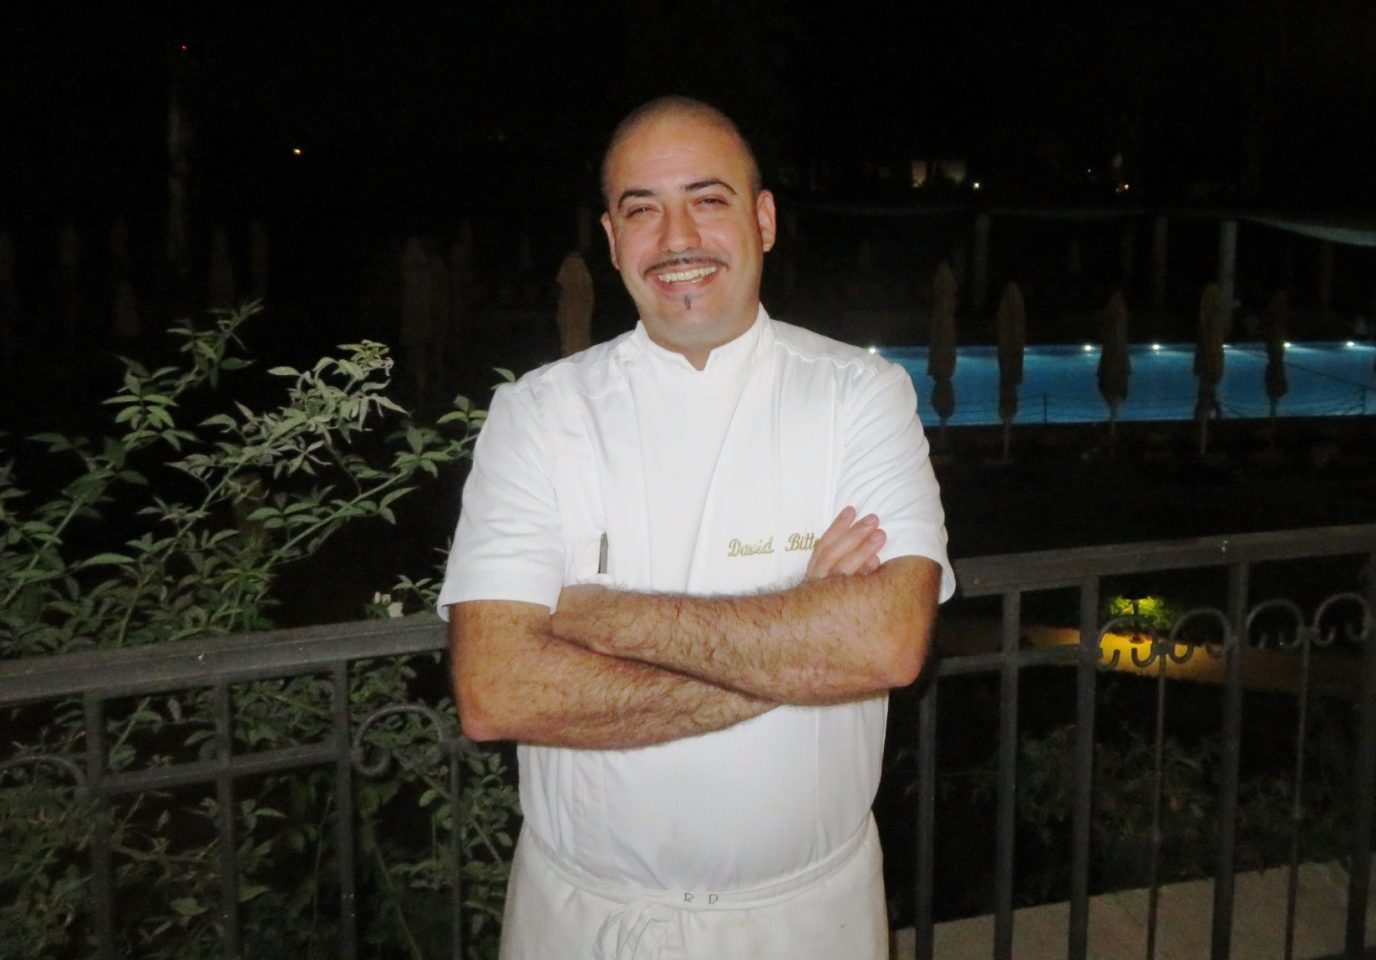 David Bitton, Executive Chef at La Regence Restaurant of the King David Hotel in Jerusalem Israel